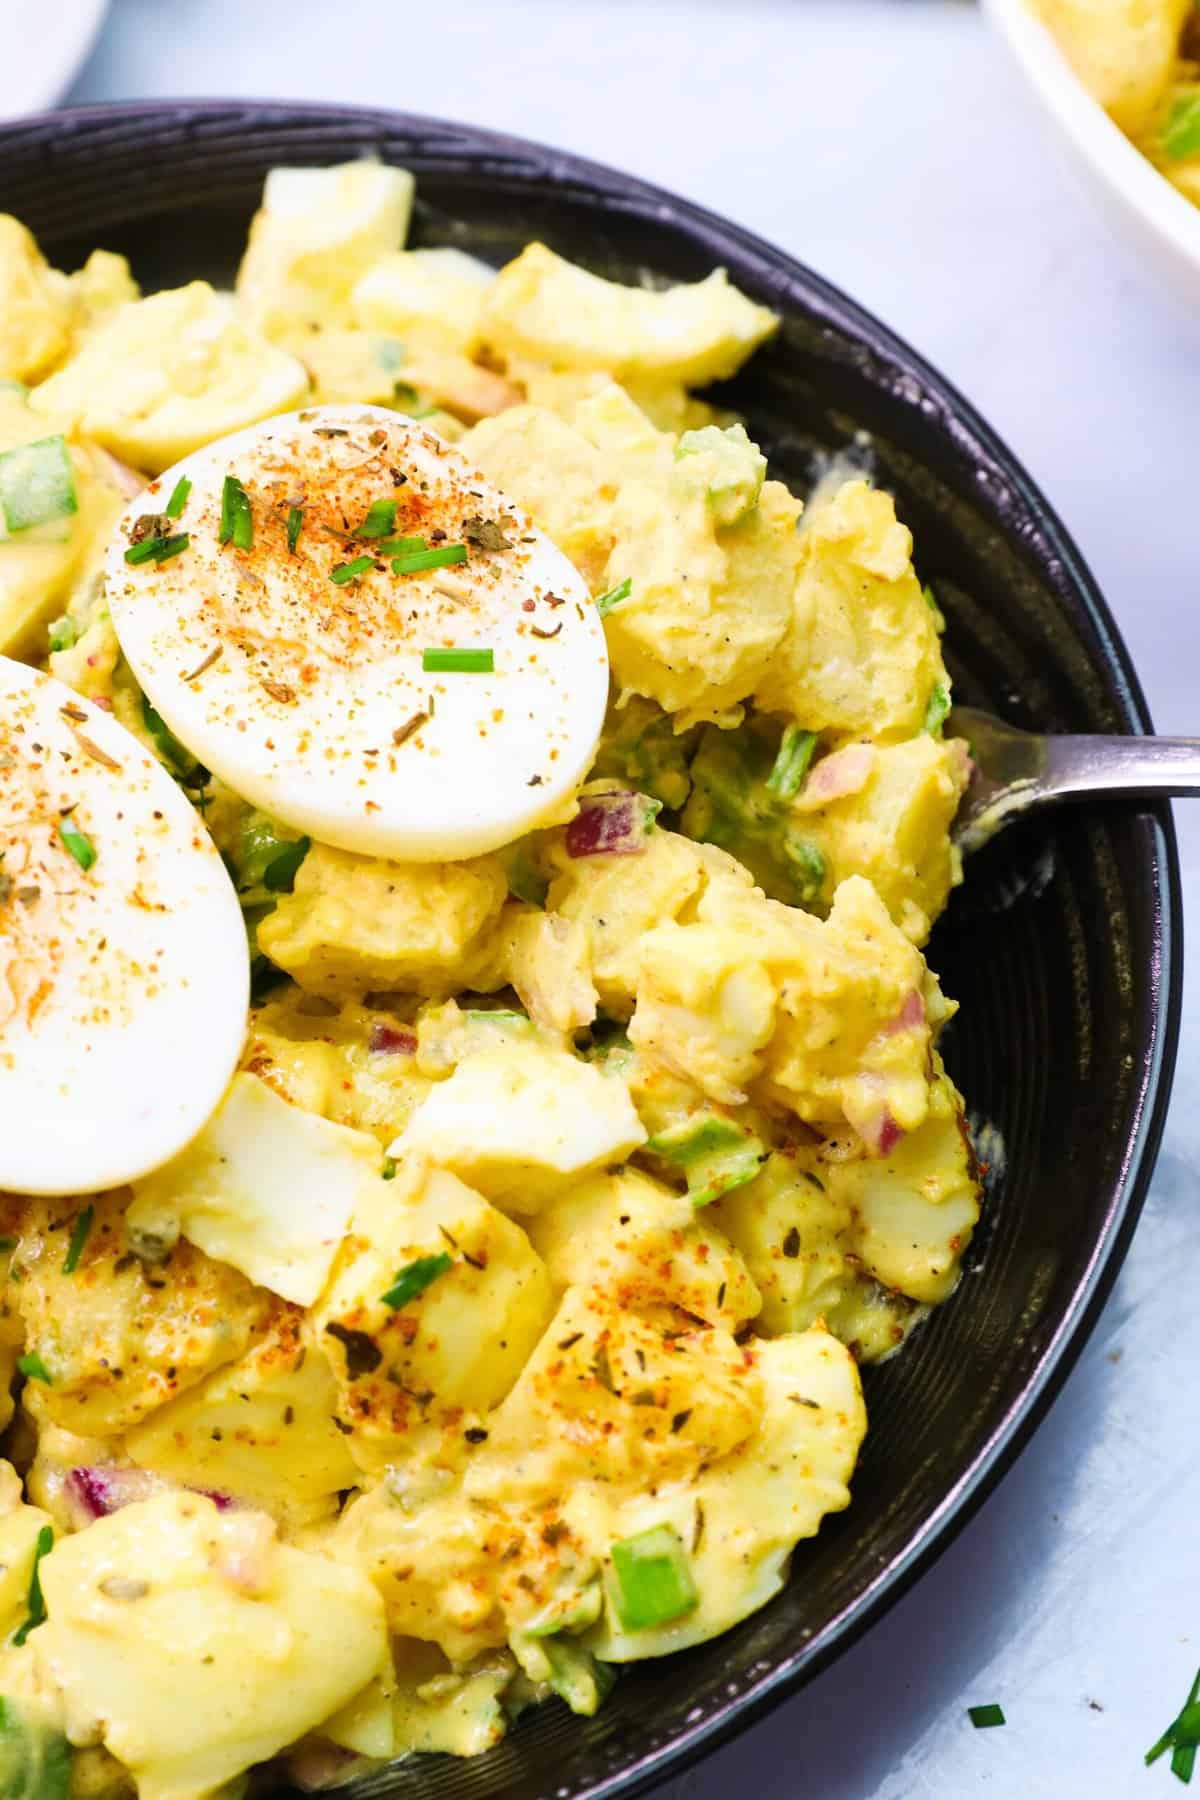 Enjoy a forkful of insanely delicious deviled egg potato salad